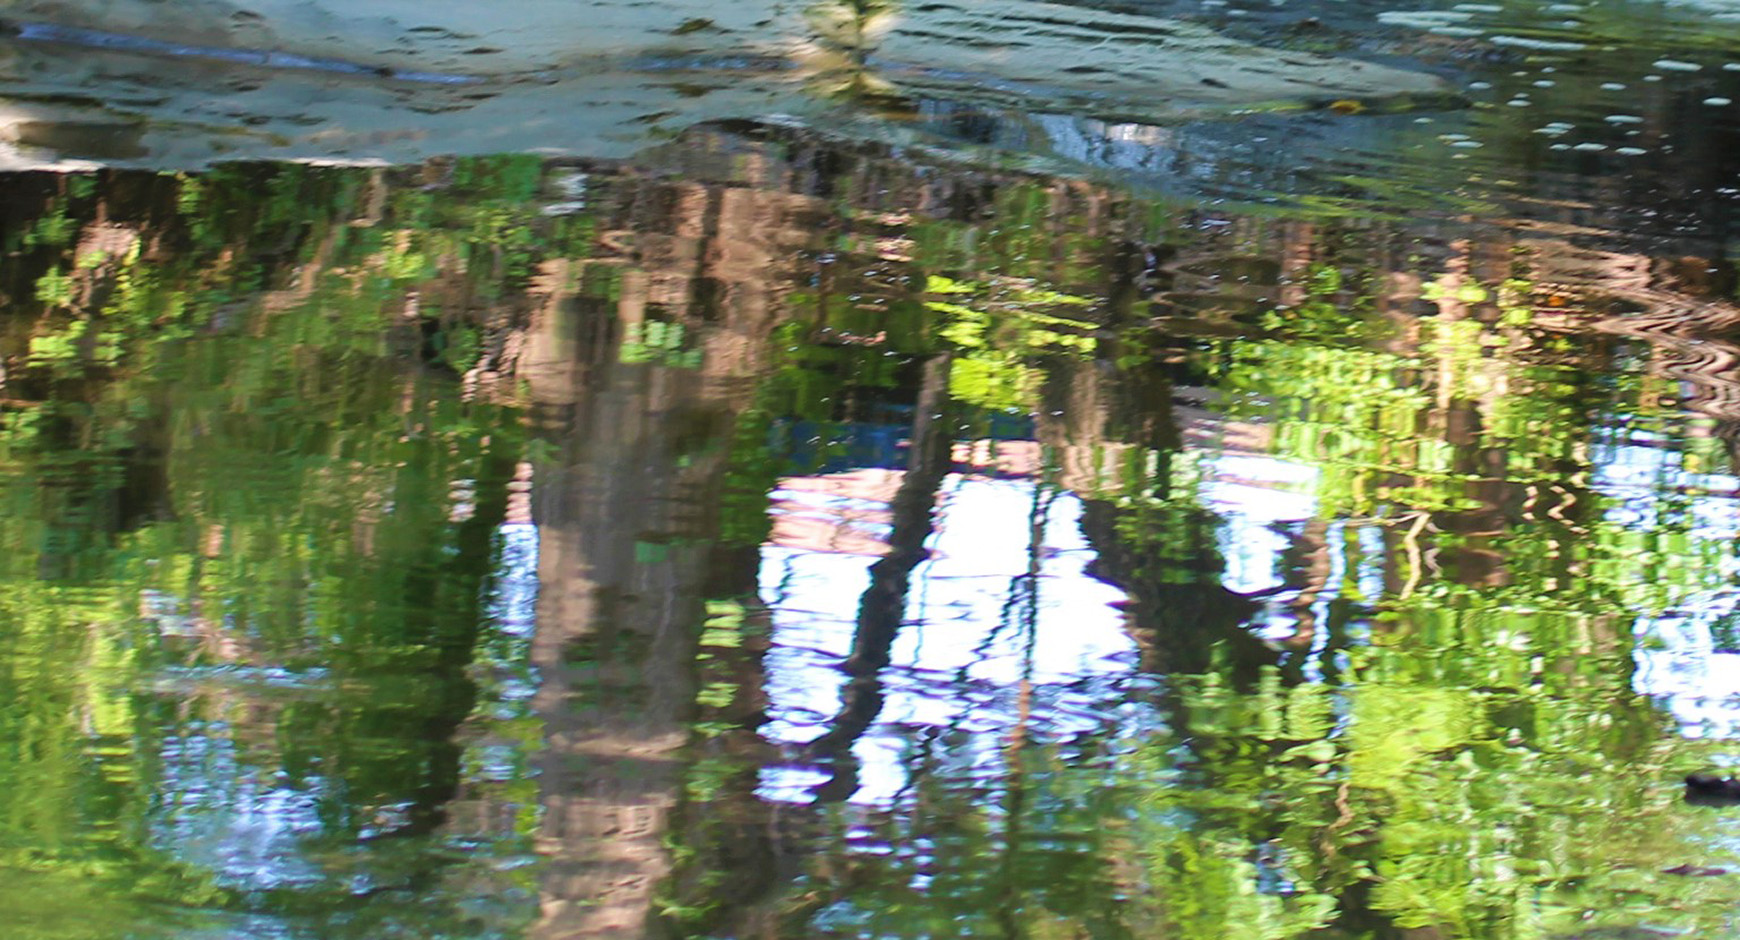 Waller Creek reflects